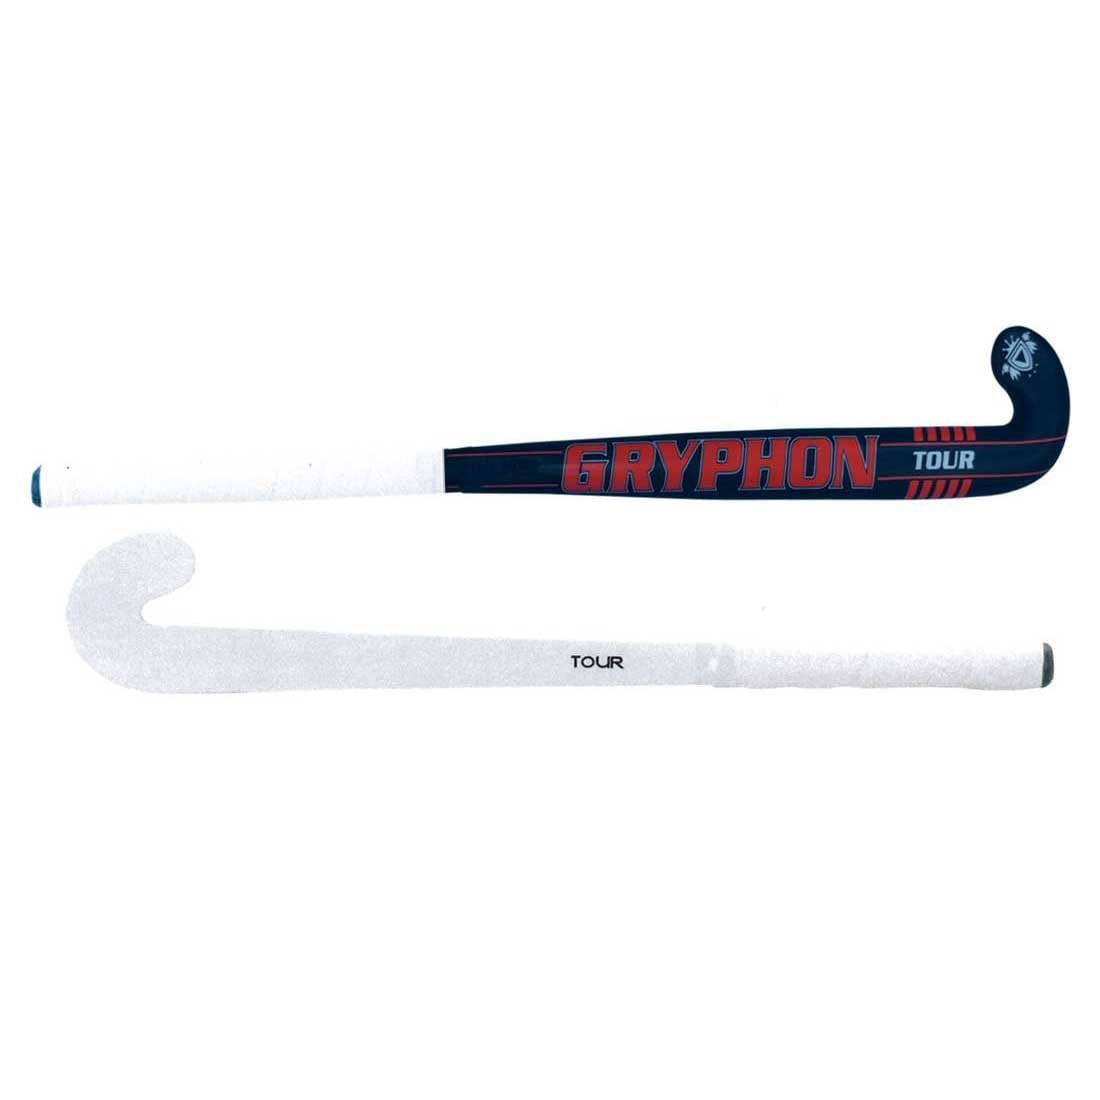 37.5"|36.5"| Gryphon Tour Pro Curve Composite Outdoor Field Hockey Stick 